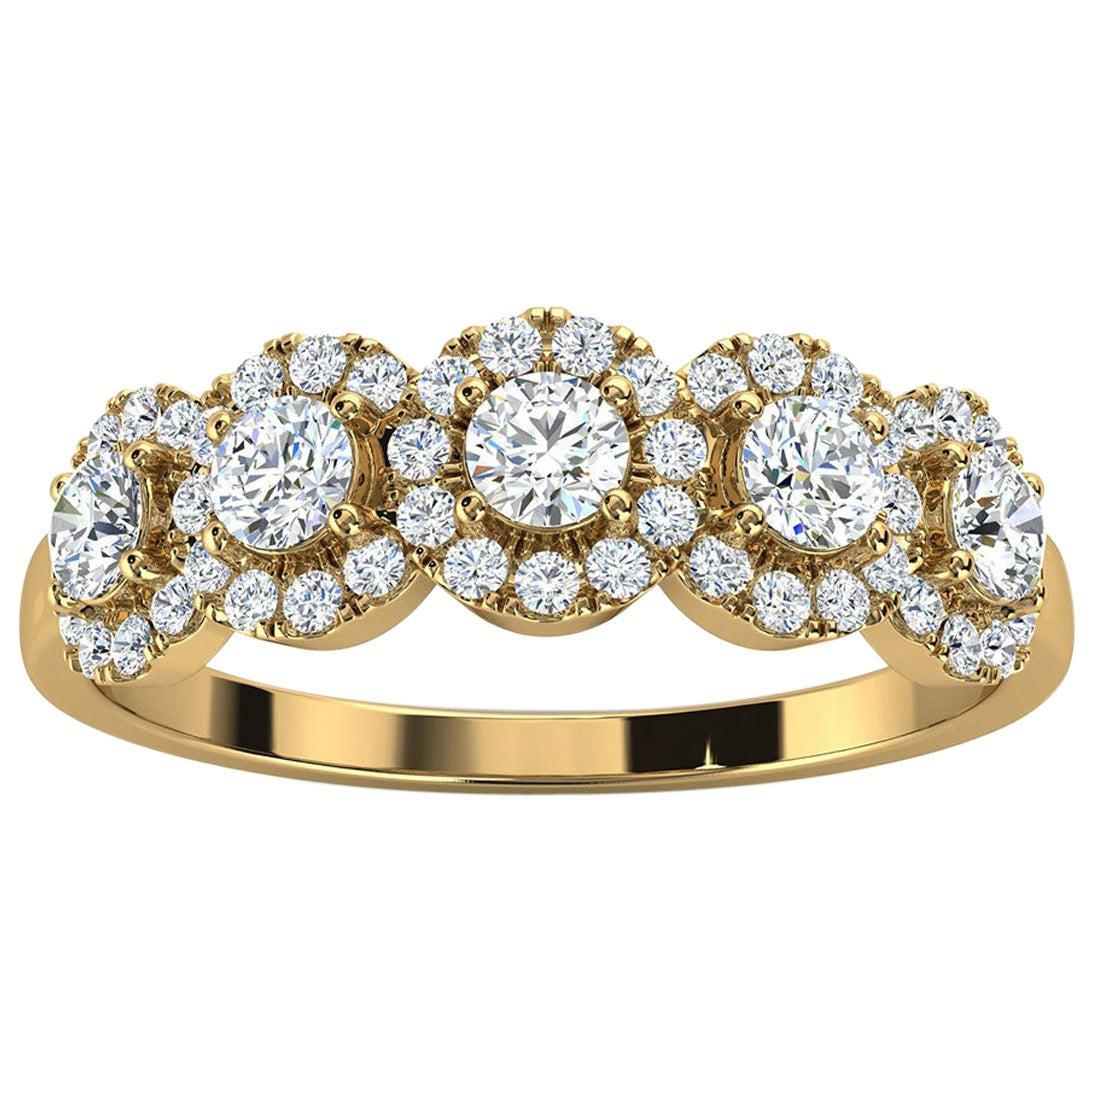 For Sale:  14k Yellow Gold Petite Jenna Halo Diamond Ring '1/2 Ct. Tw'